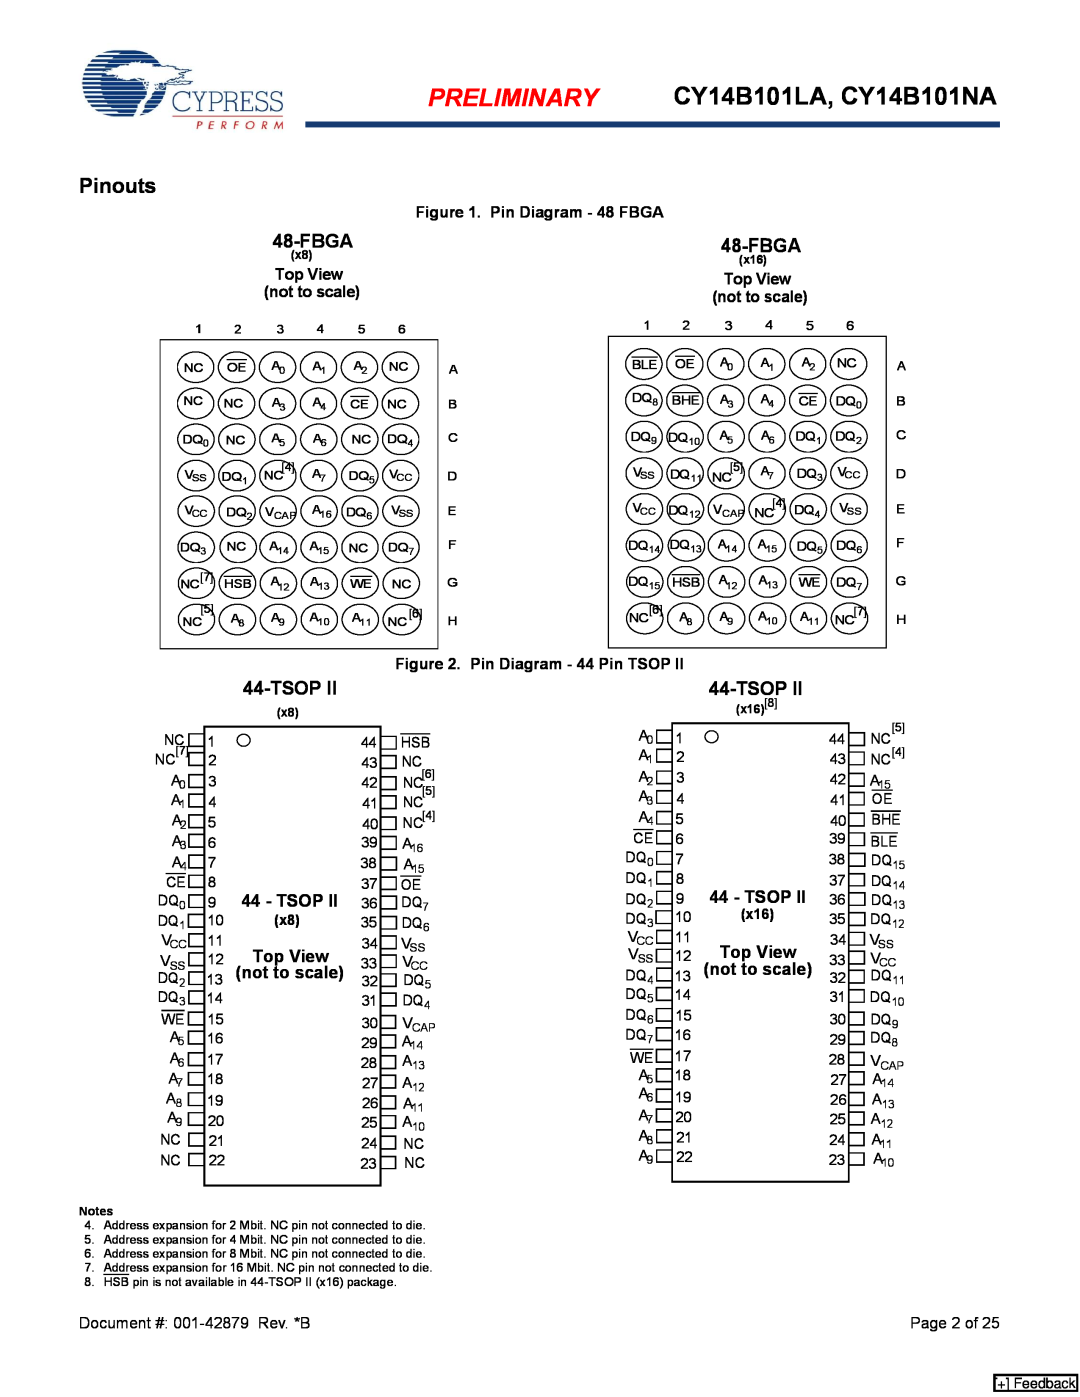 Cypress manual Pinouts, Tsop, 9 44 - TSOP, Top View 13 not to scale, PRELIMINARY CY14B101LA, CY14B101NA, Fbga 